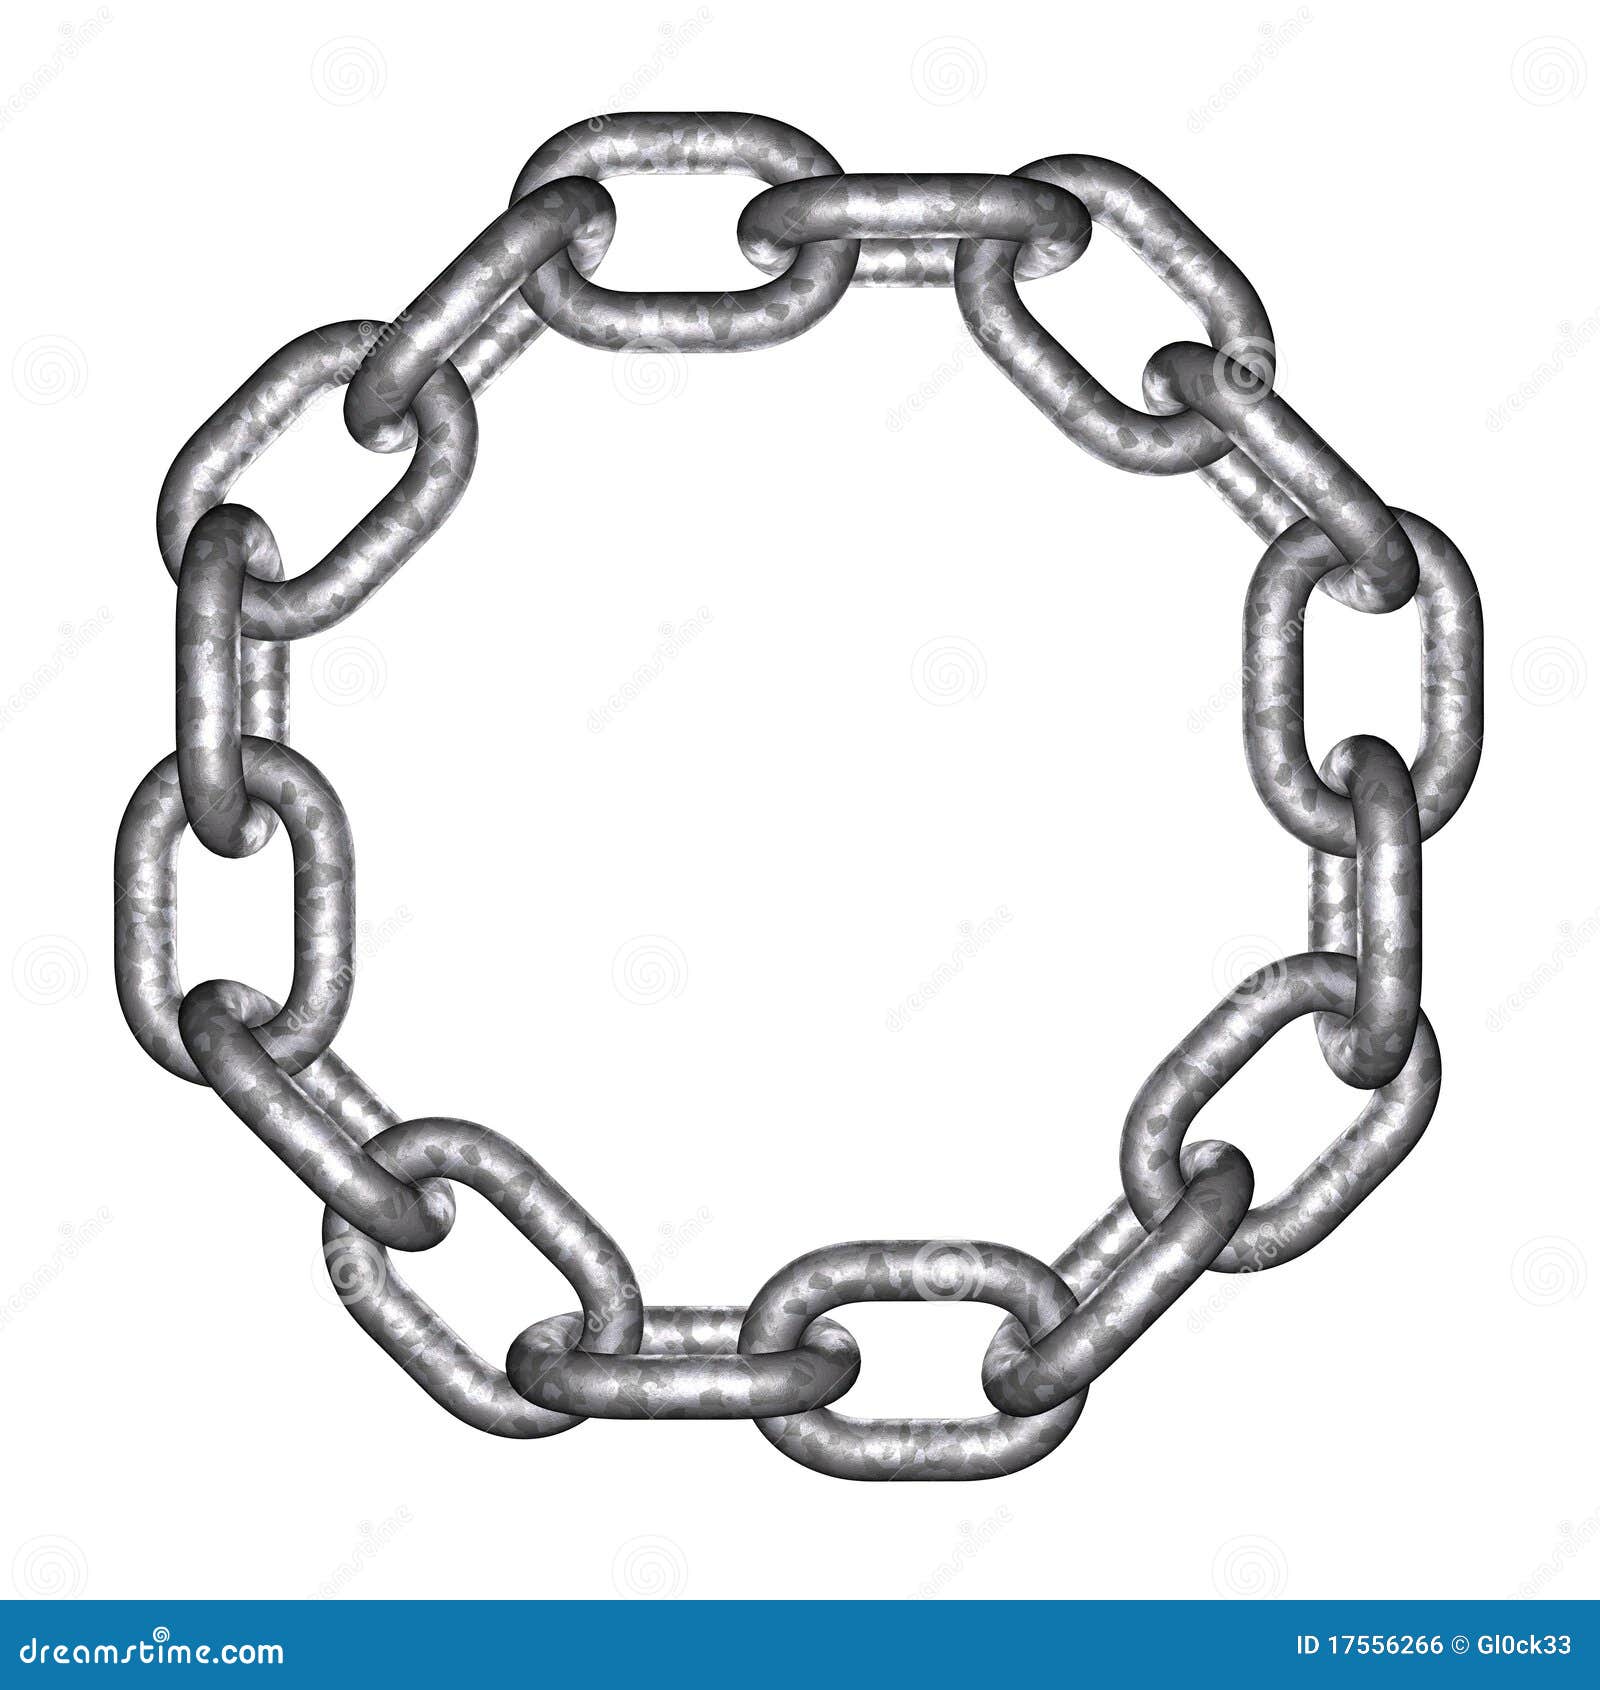 Chain stock illustration. Illustration of plan, strength - 17556266